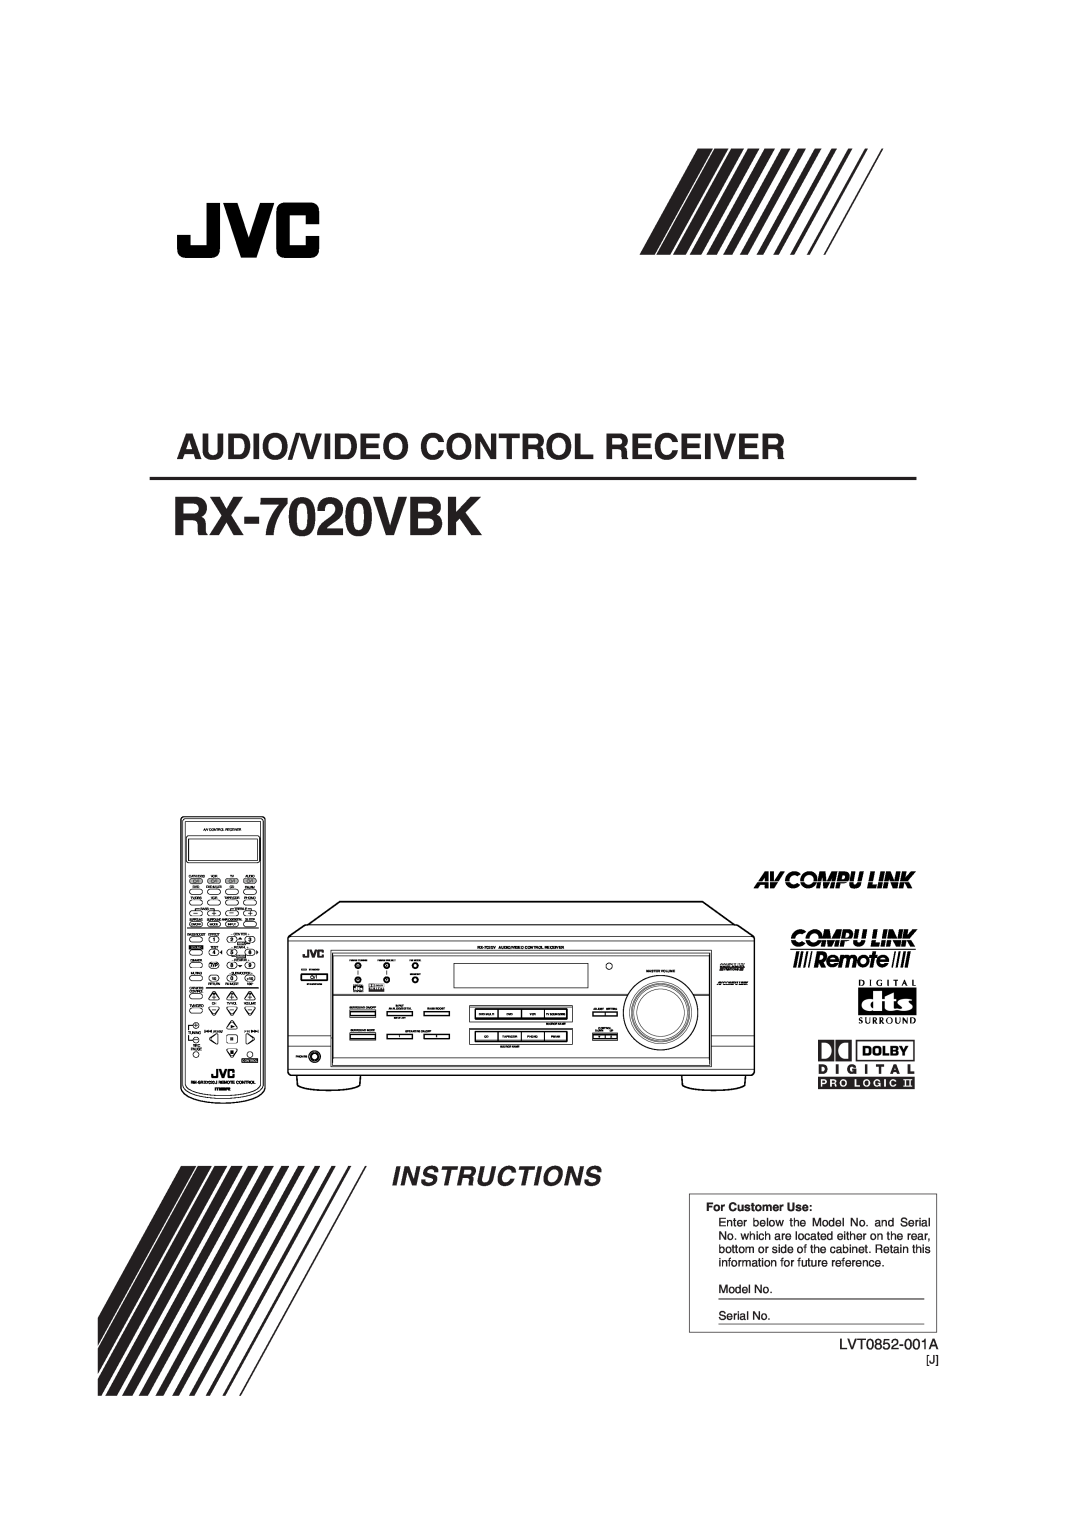 JVC RX-7020VBK manual Audio/Video Control Receiver, Instructions, LVT0852-001A, For Customer Use, COMPULINK Remote, Menu 